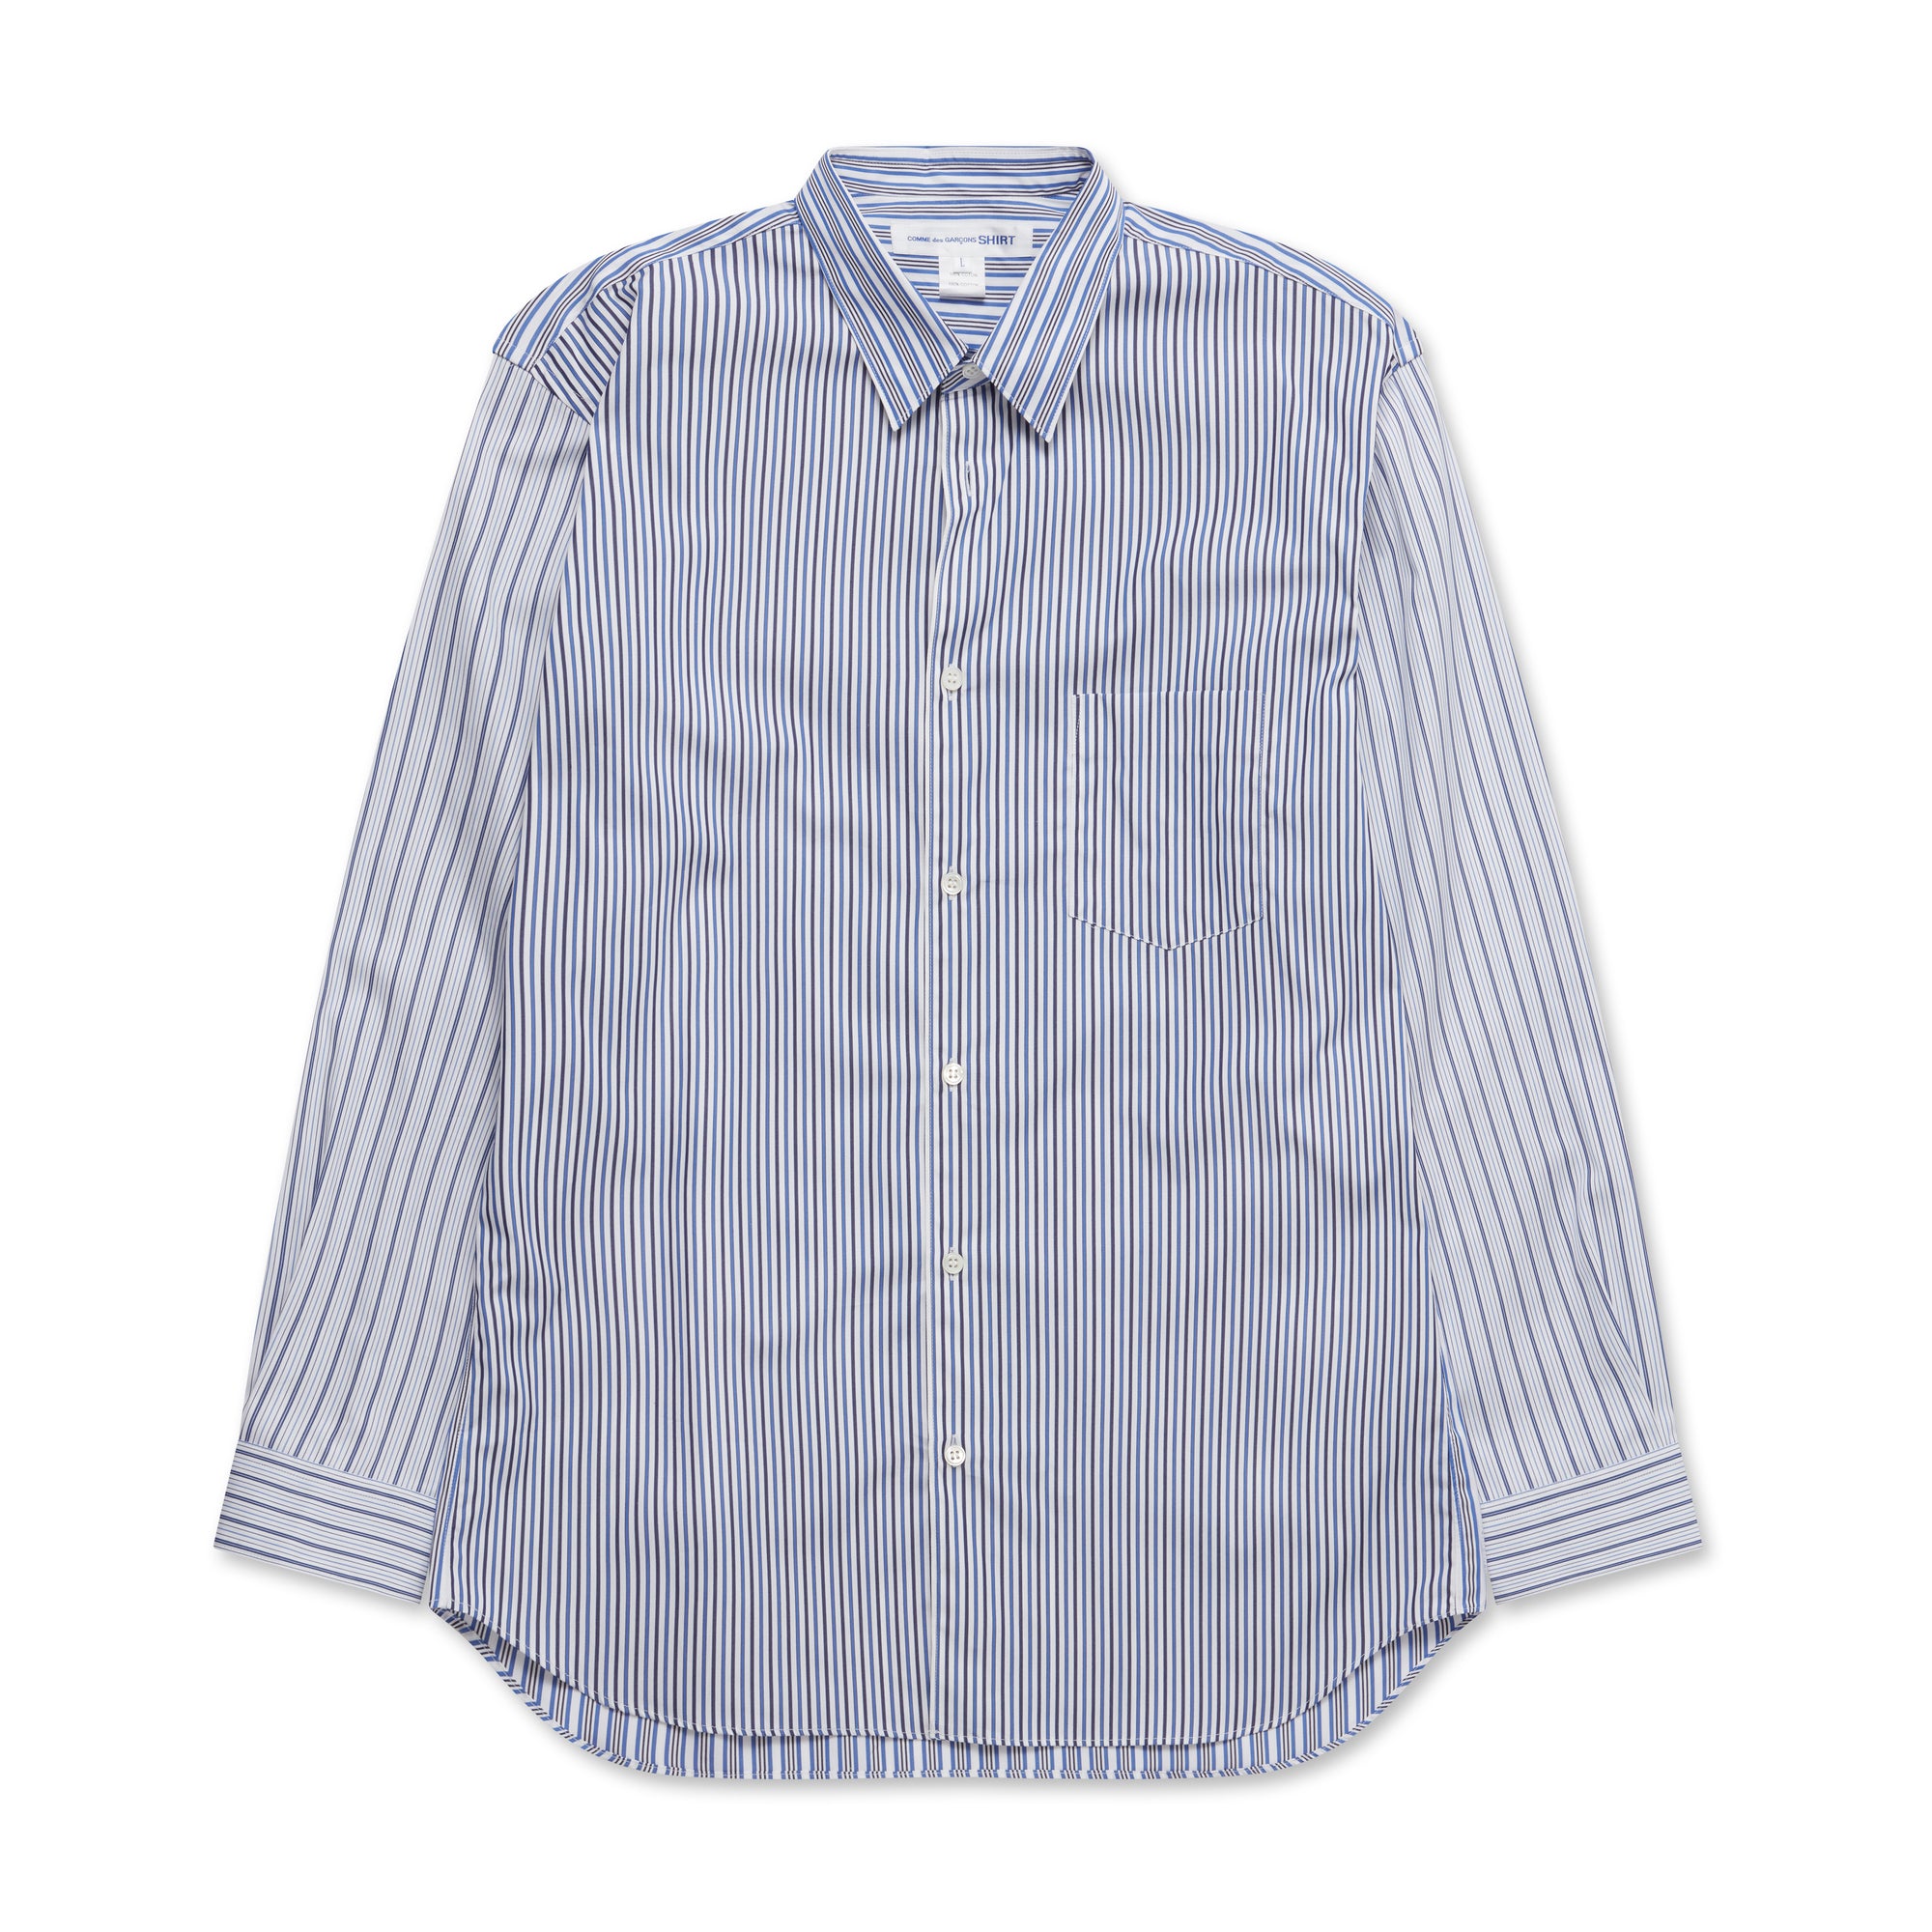 CDG Shirt Forever - Classic Fit Stripe Shirt - (Stripe) view 1